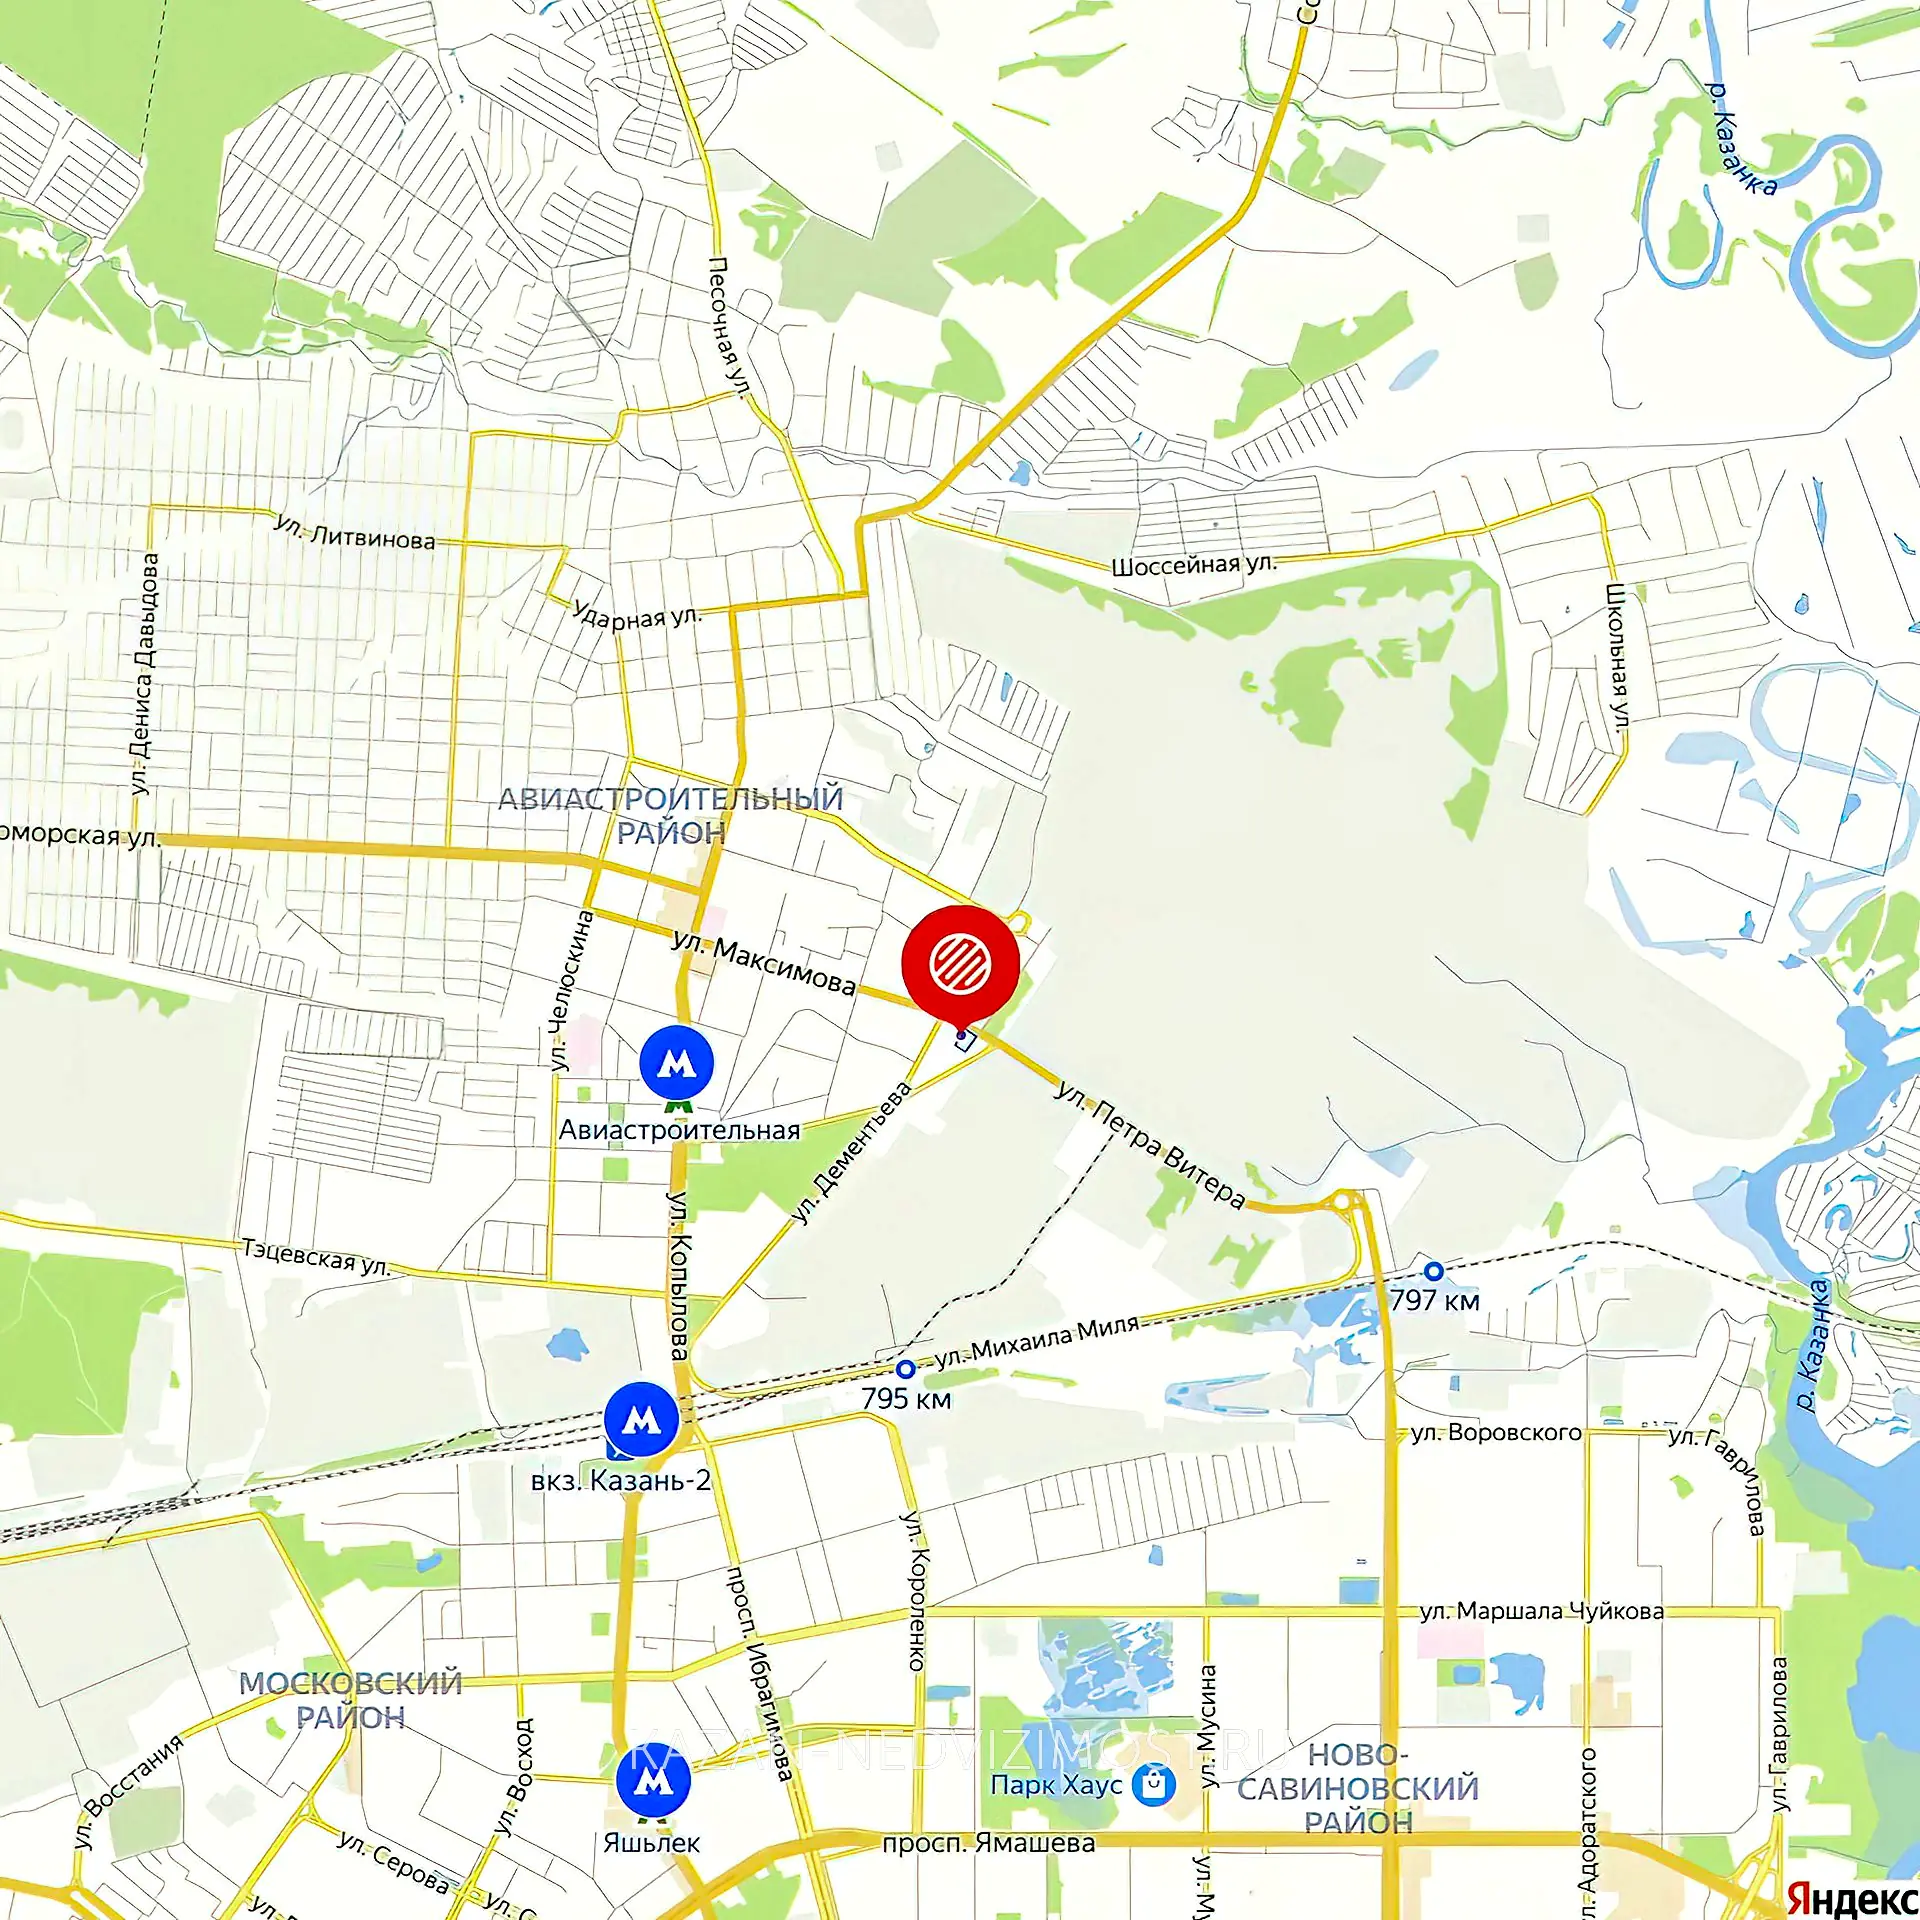 Расположение и маршрут на карте от ЖК Авиатор до центра города